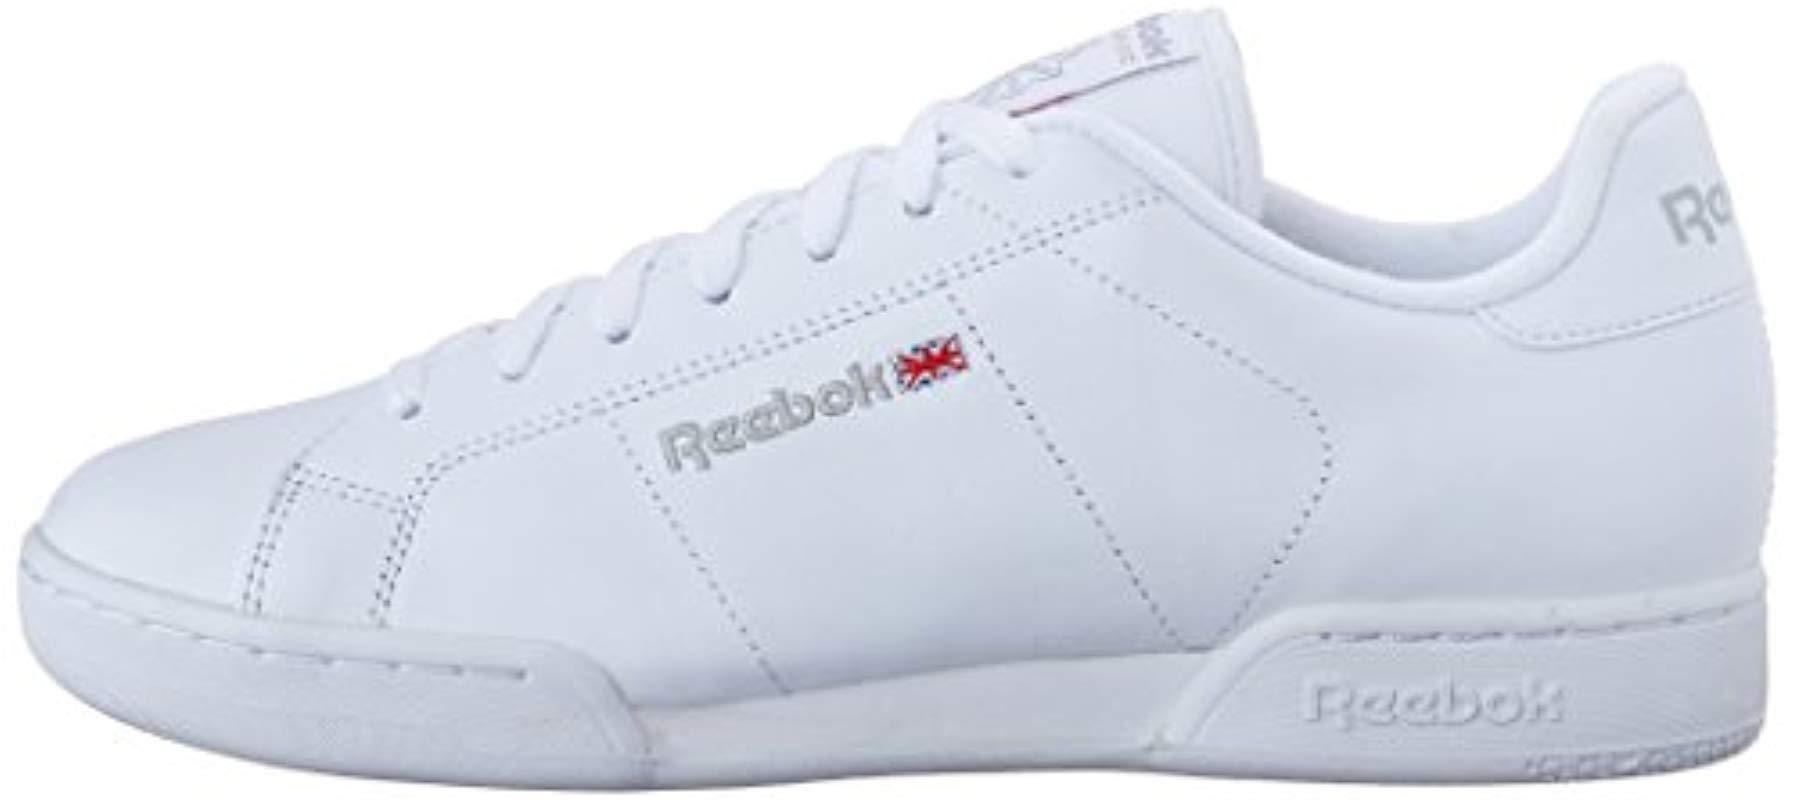 Reebok 's Npc Ii Low-top Sneakers for Men | Lyst